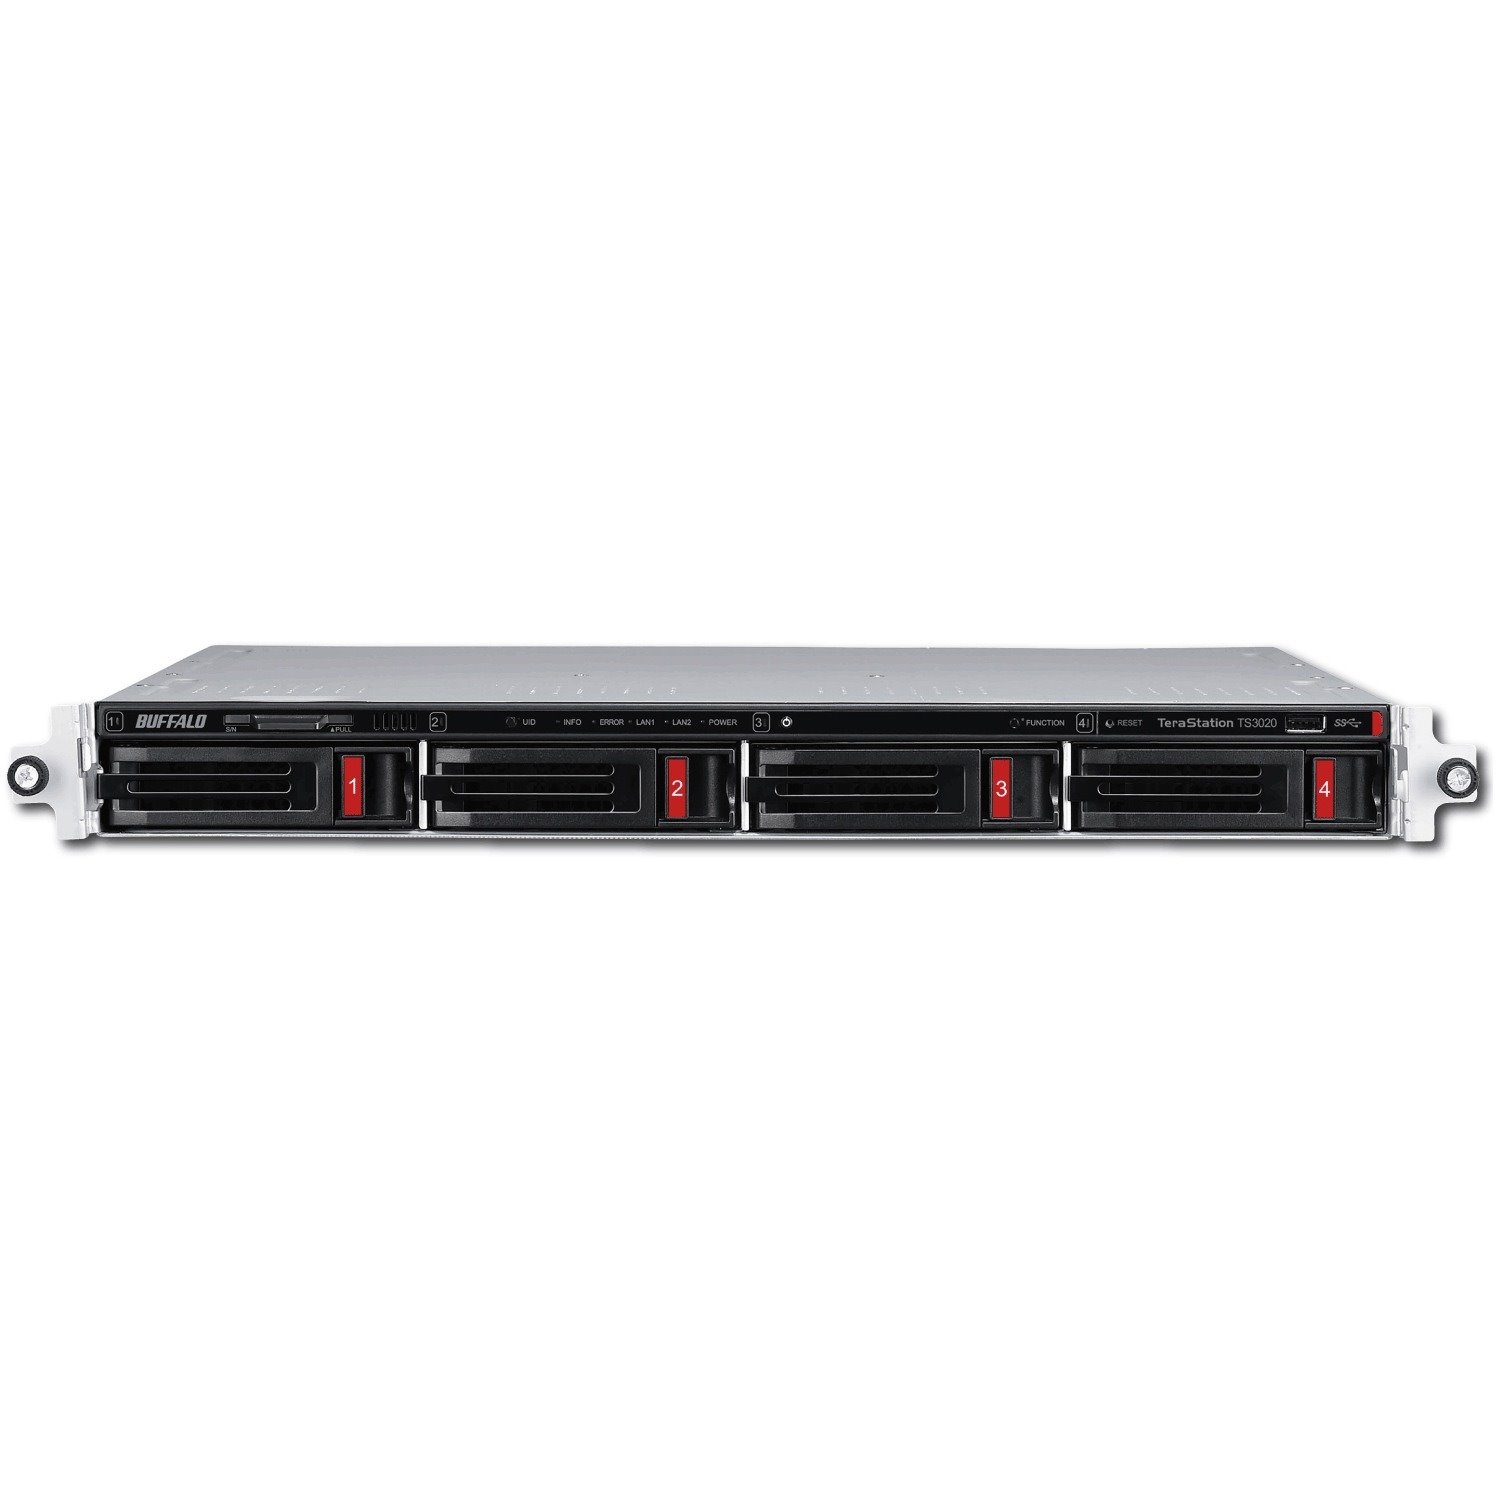 Buffalo TeraStation 3420RN Rackmount 16TB NAS Hard Drives Included (4 x 4TB, 4 Bay)